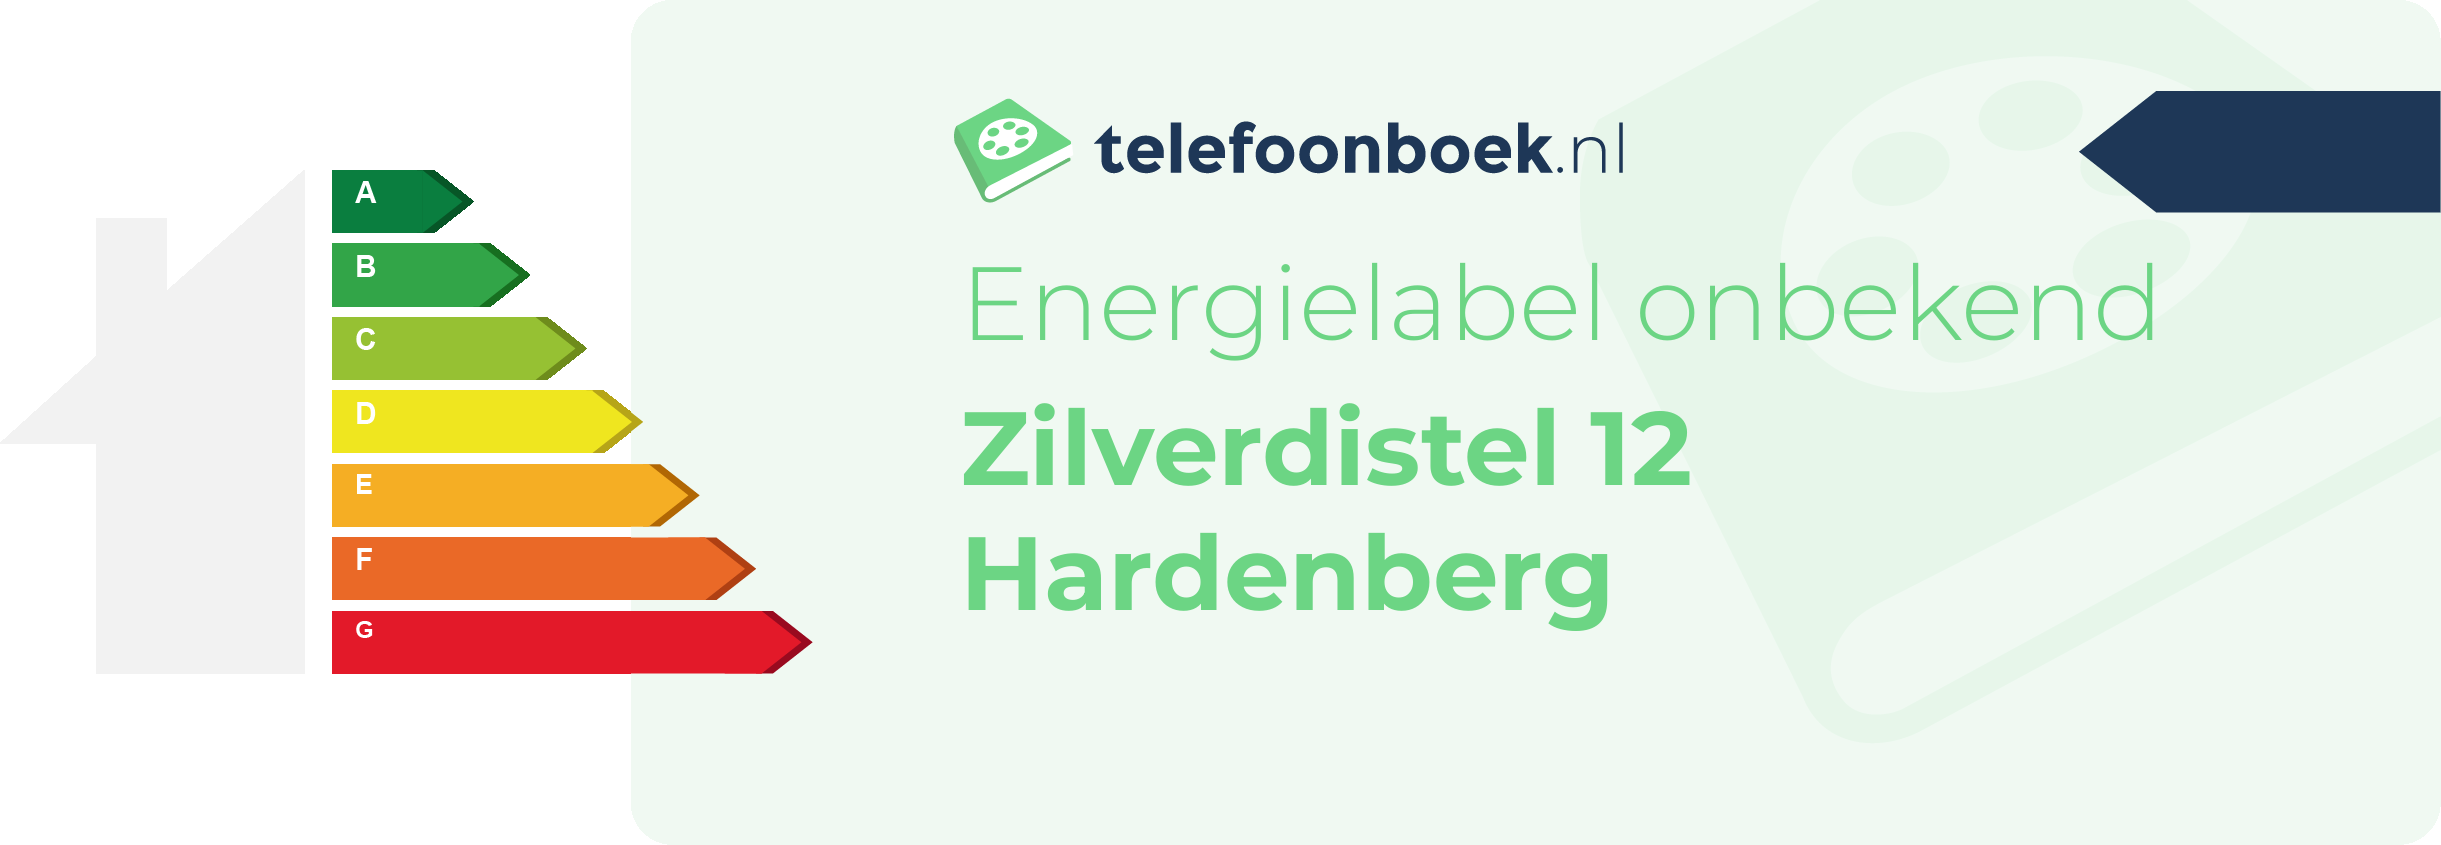 Energielabel Zilverdistel 12 Hardenberg